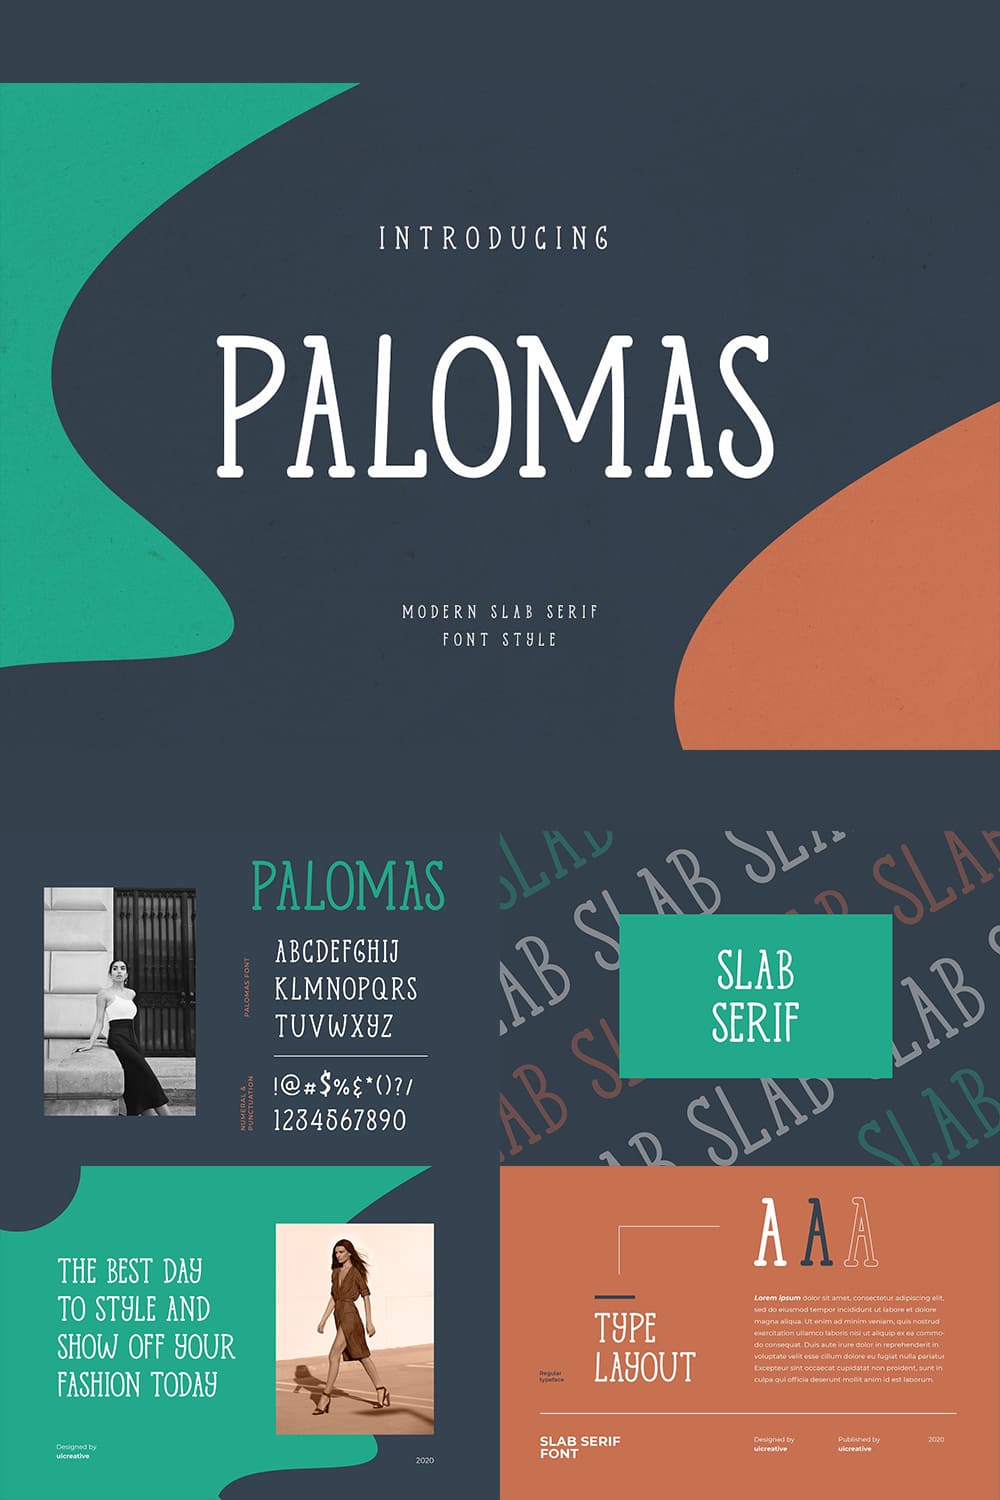 Palomas Casual Serif Font Introducing - Modern Slab Serif Font Style.